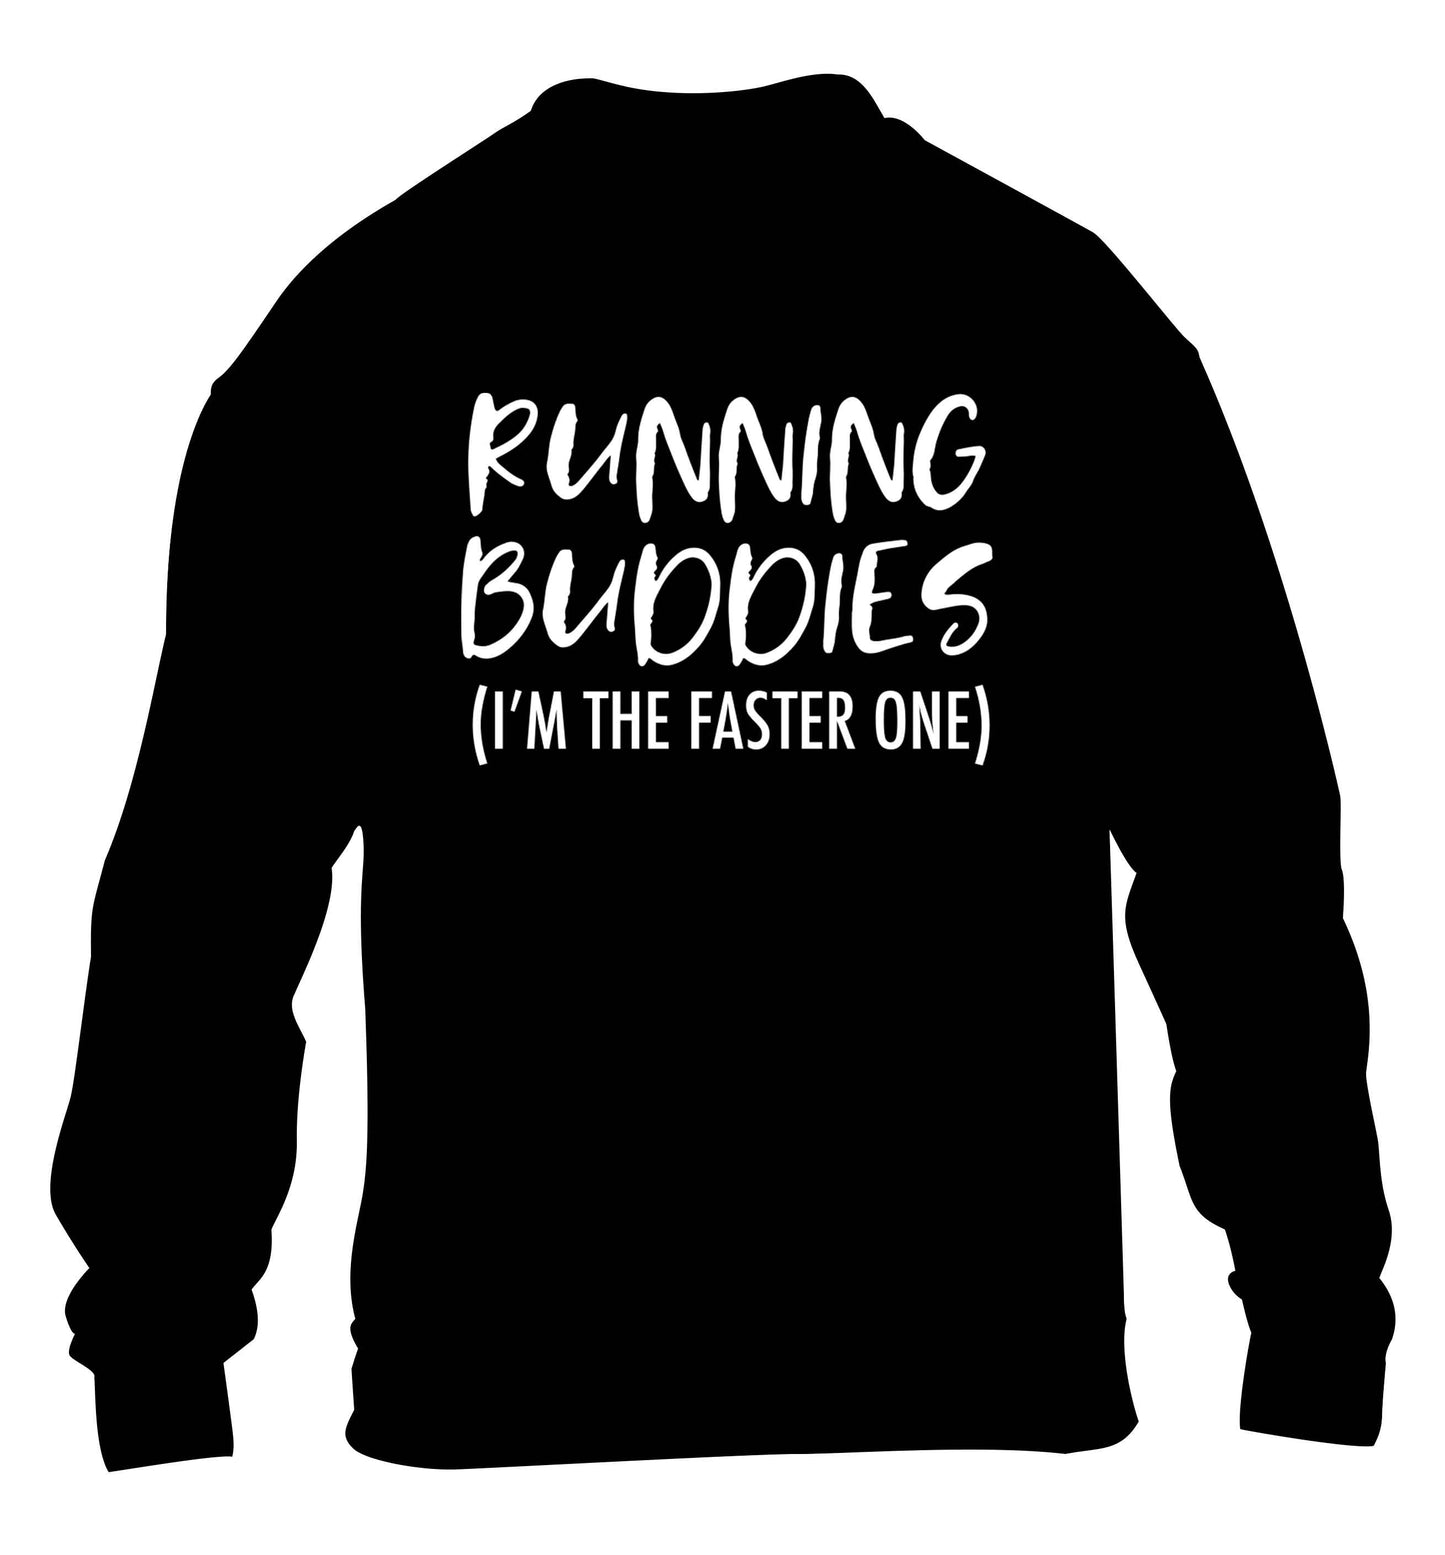 Running buddies (I'm the faster one) children's black sweater 12-13 Years